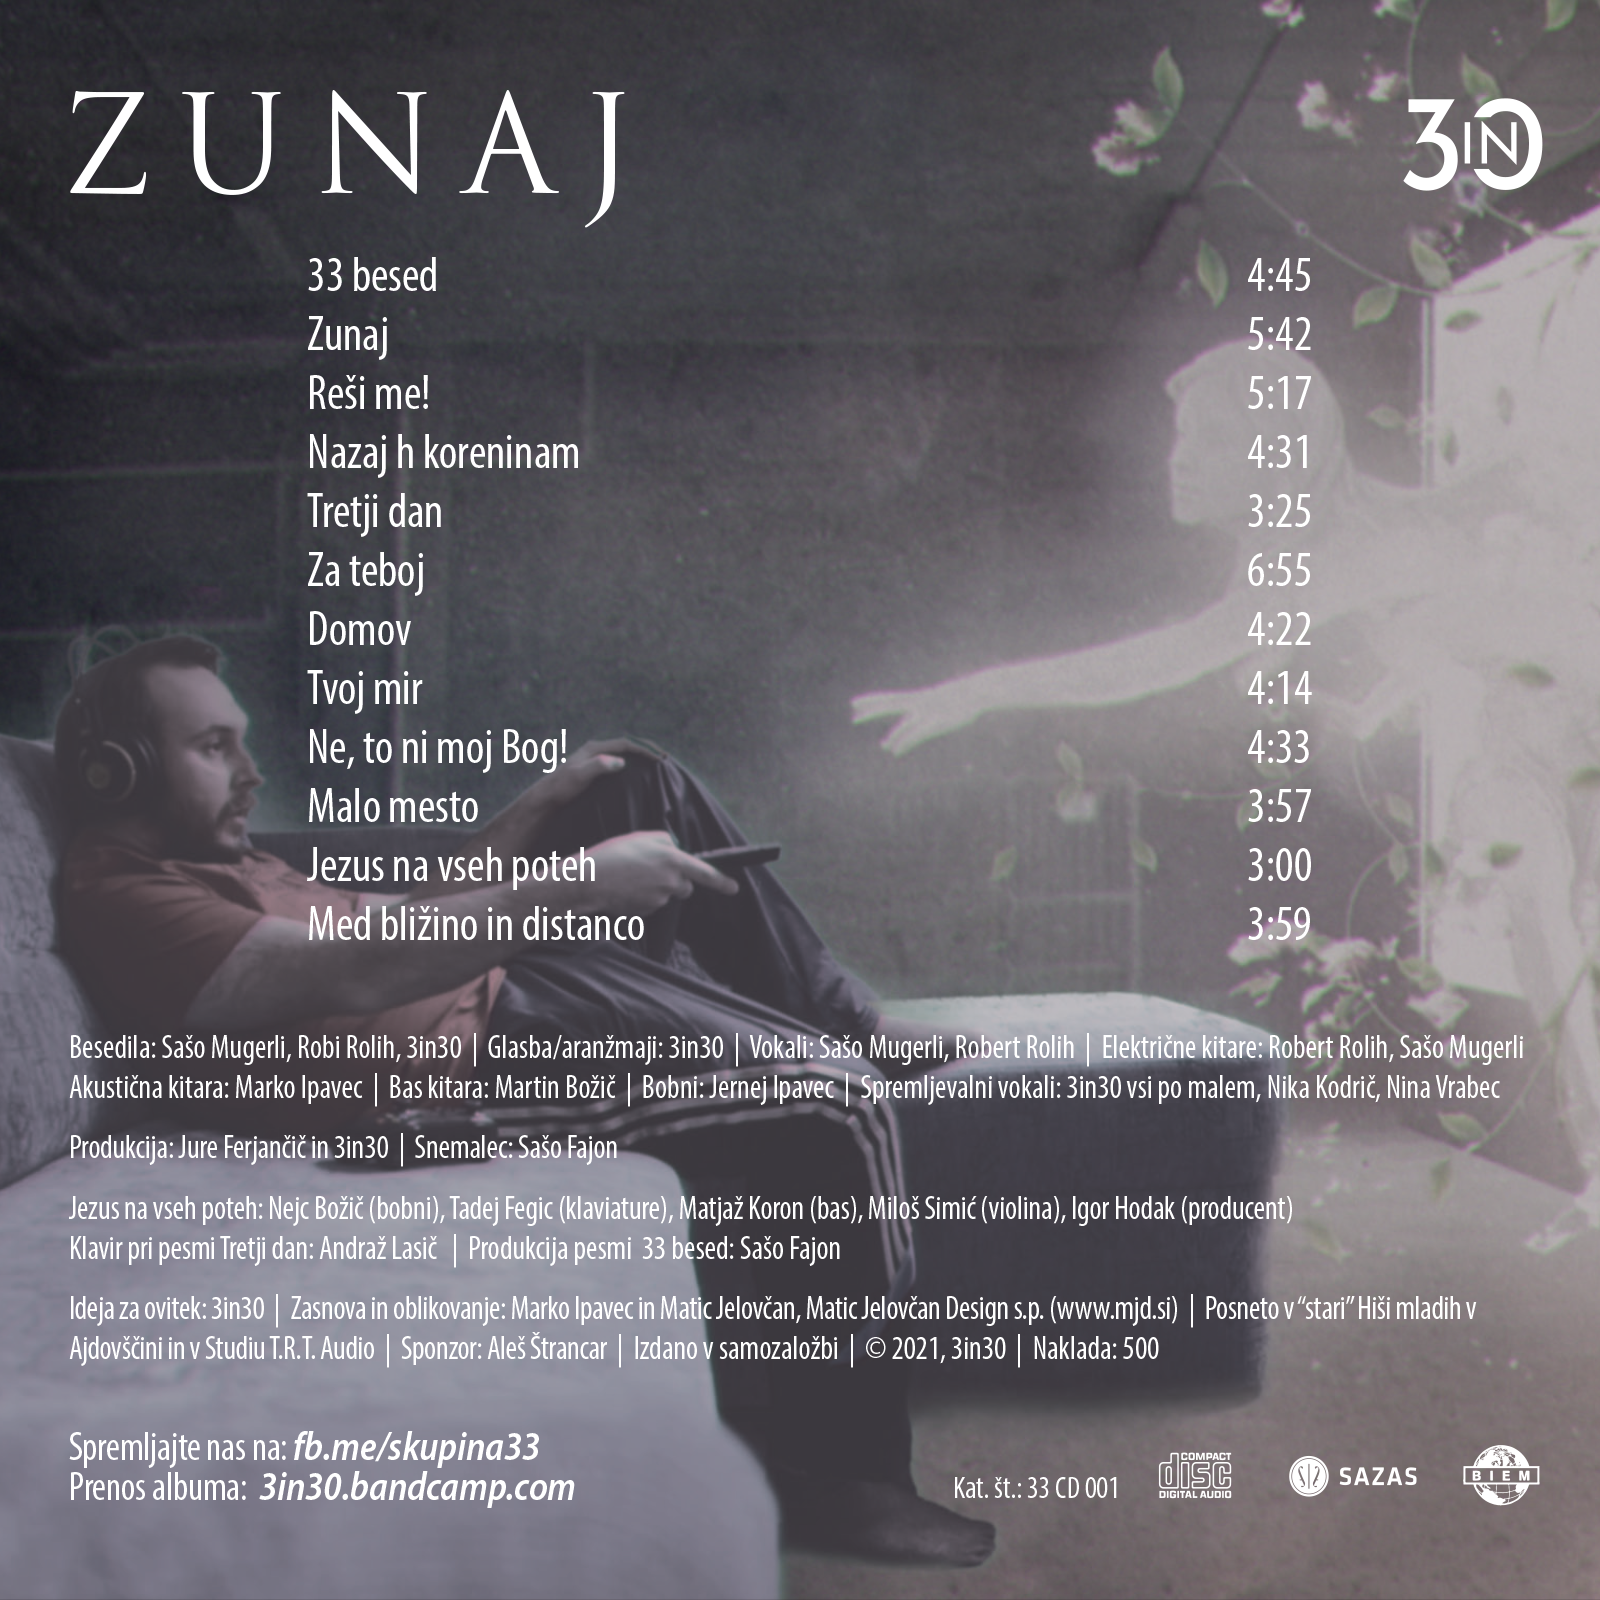 cover cut web back 2 - Cover for an Album "Zunaj"